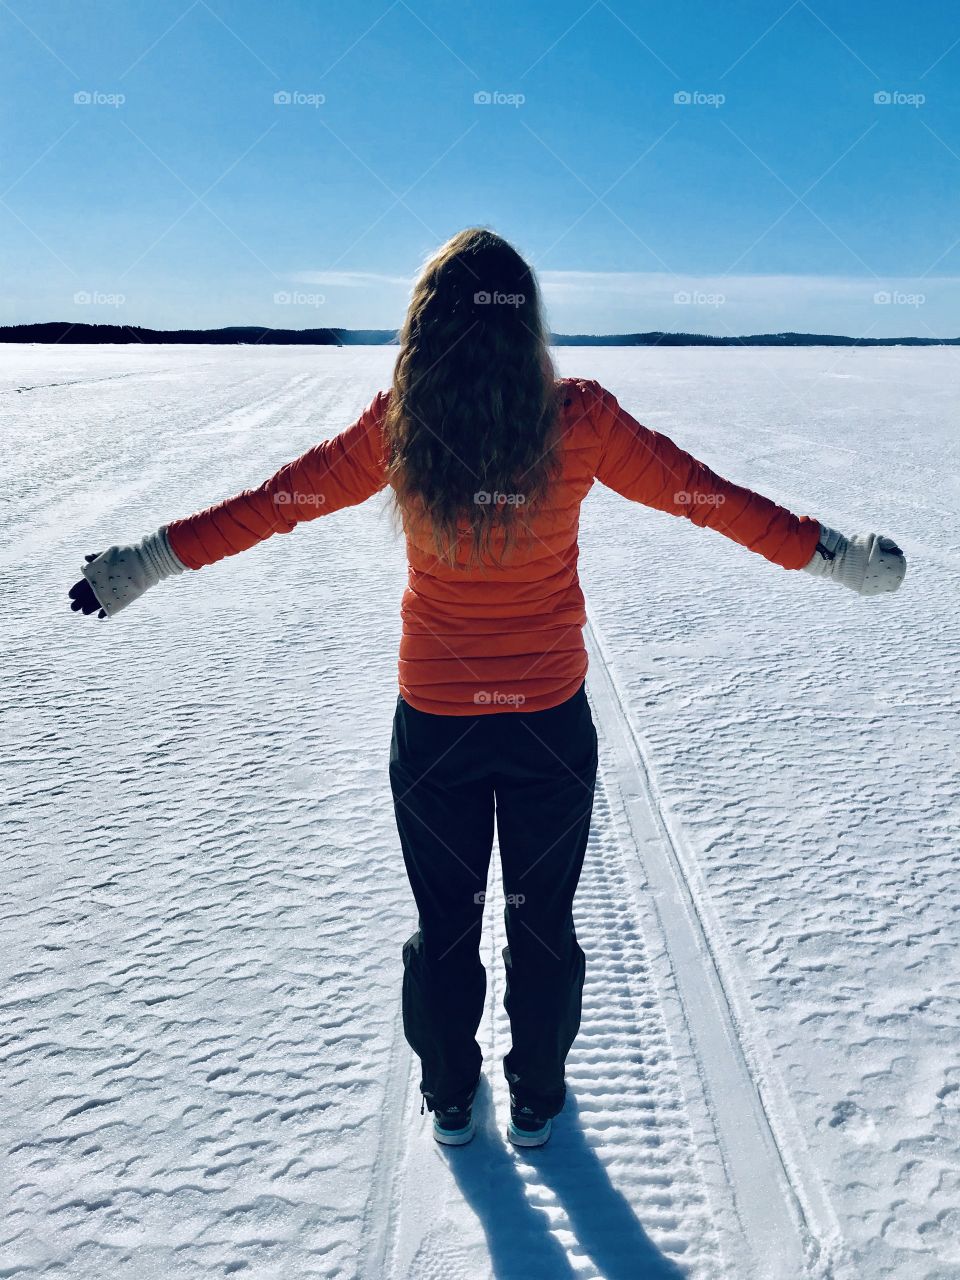 Enjoying the sun on a frozen lake